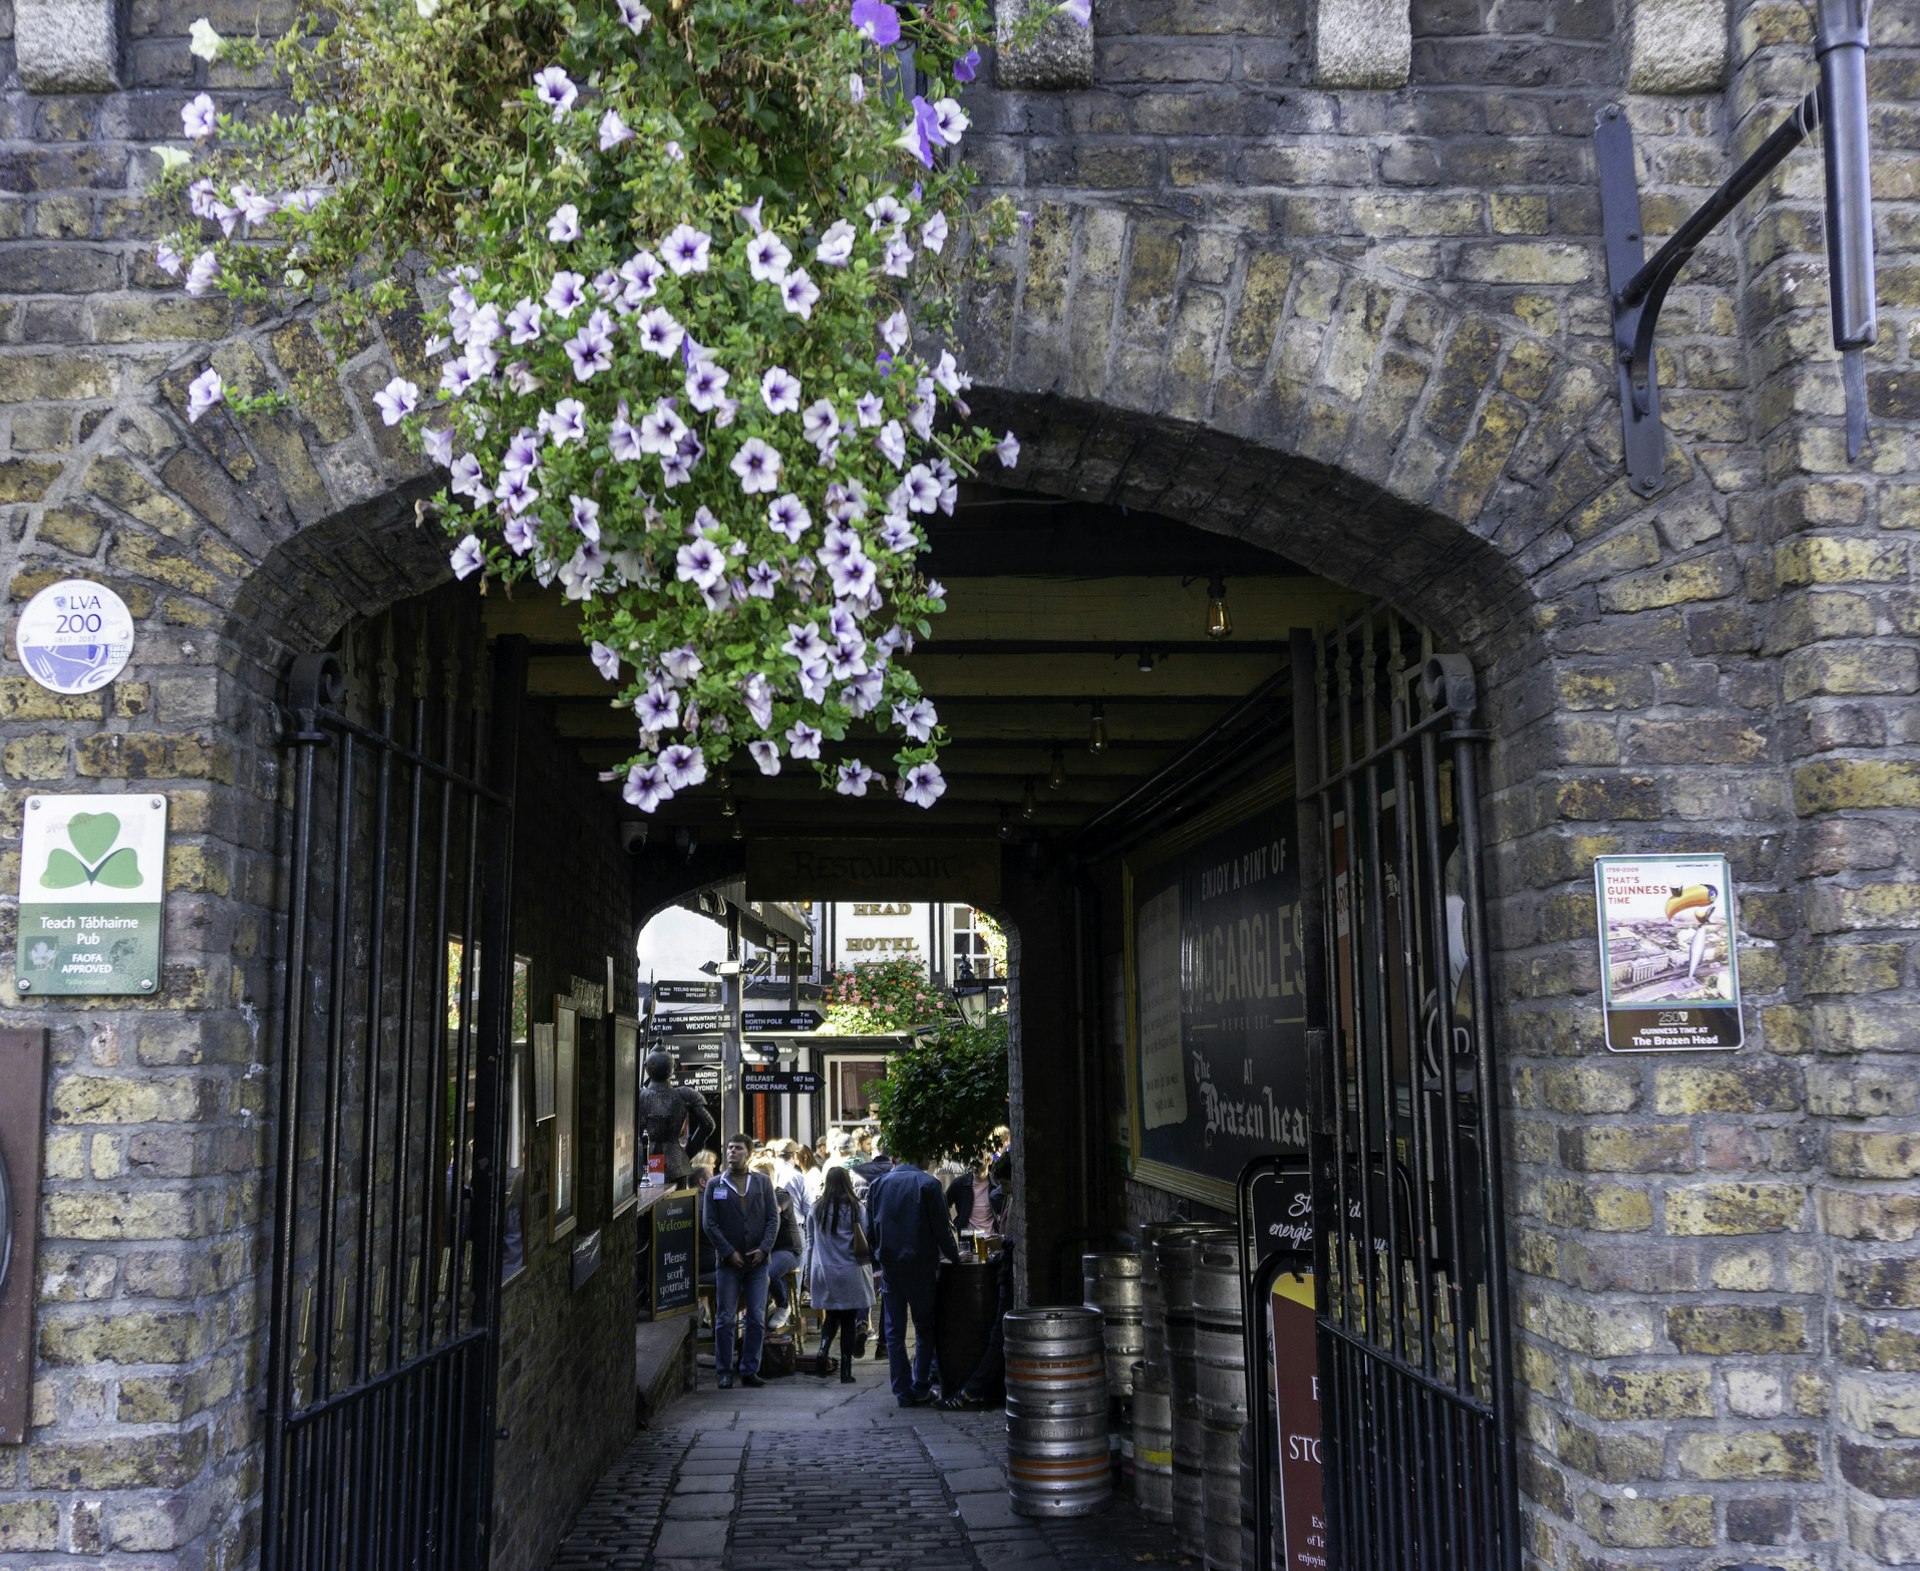 A stone archway leading to the courtyard of the Brazen Head pub in Bridge Street, Dublin.